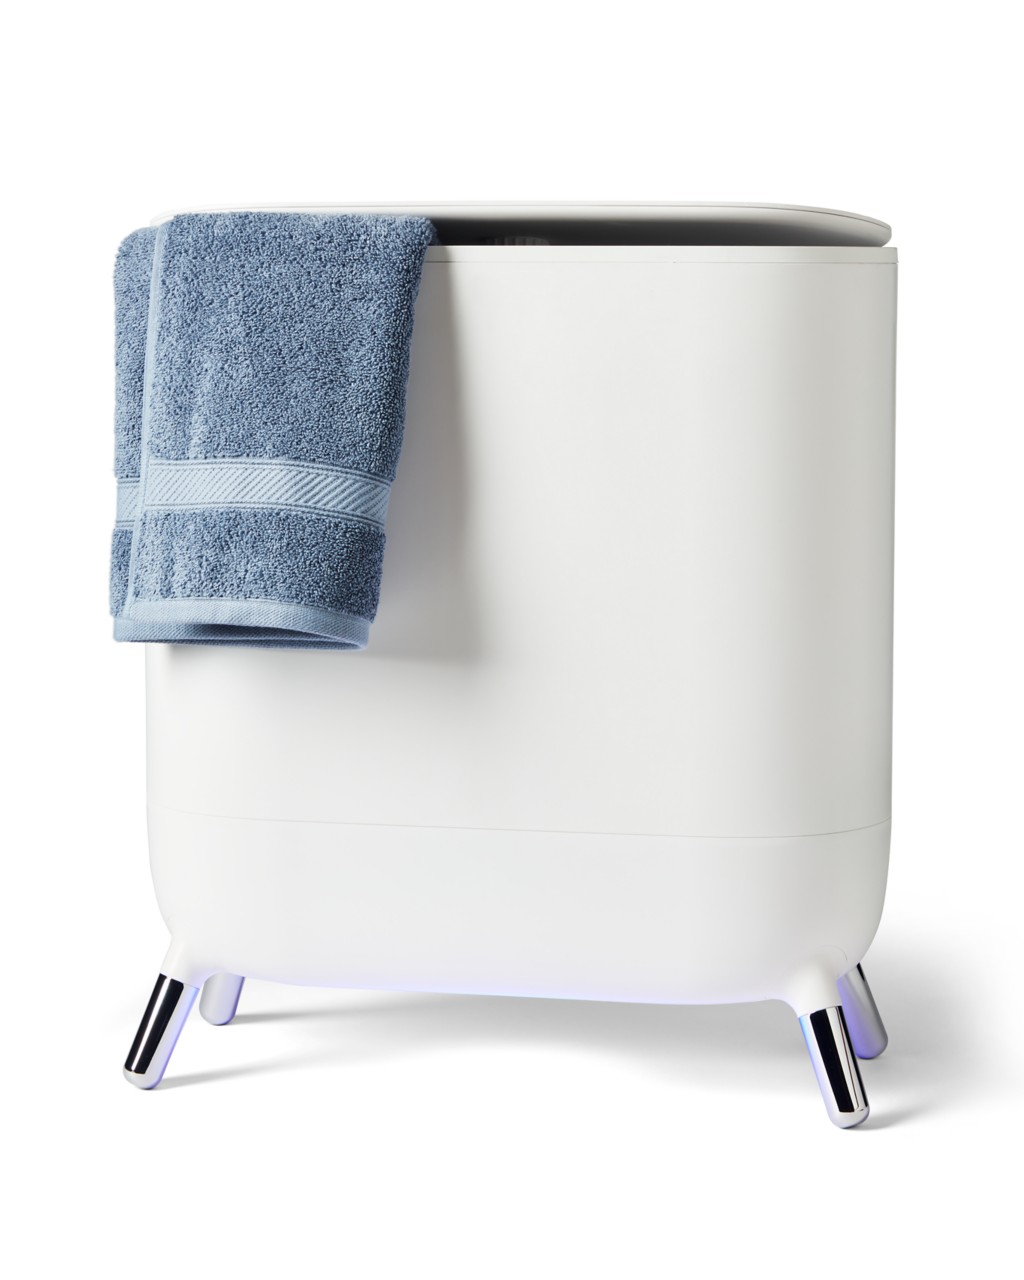 Sharper Image’s SpaStudio Towel Warmer